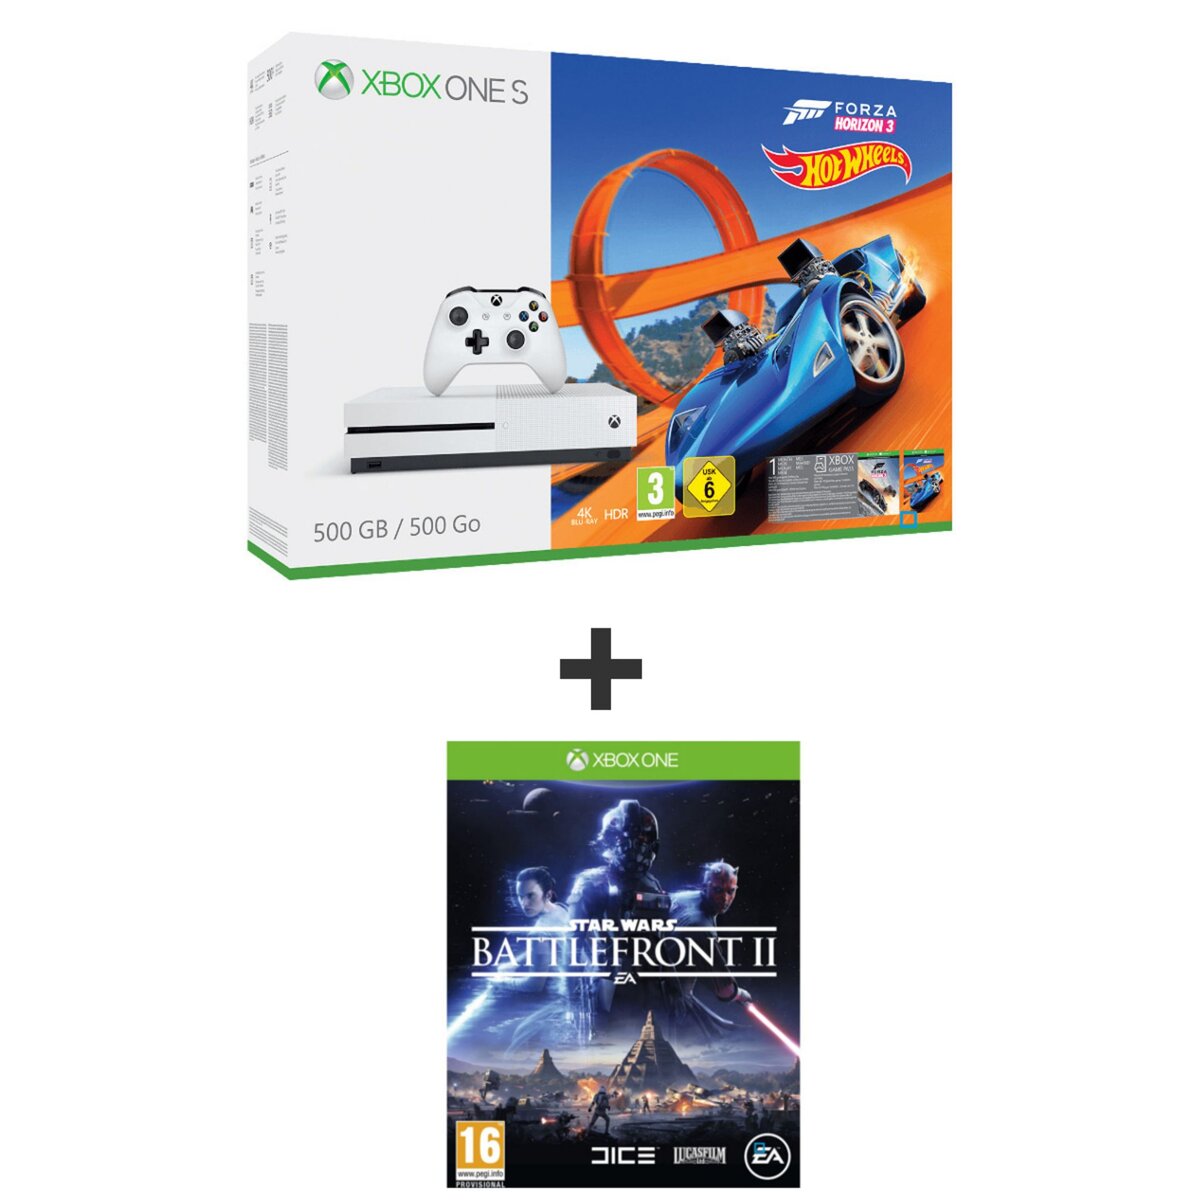 Console Xbox One S 500Go + Forza Horizon 3 + Hot Wheels DLC + Star Wars Battlefront II